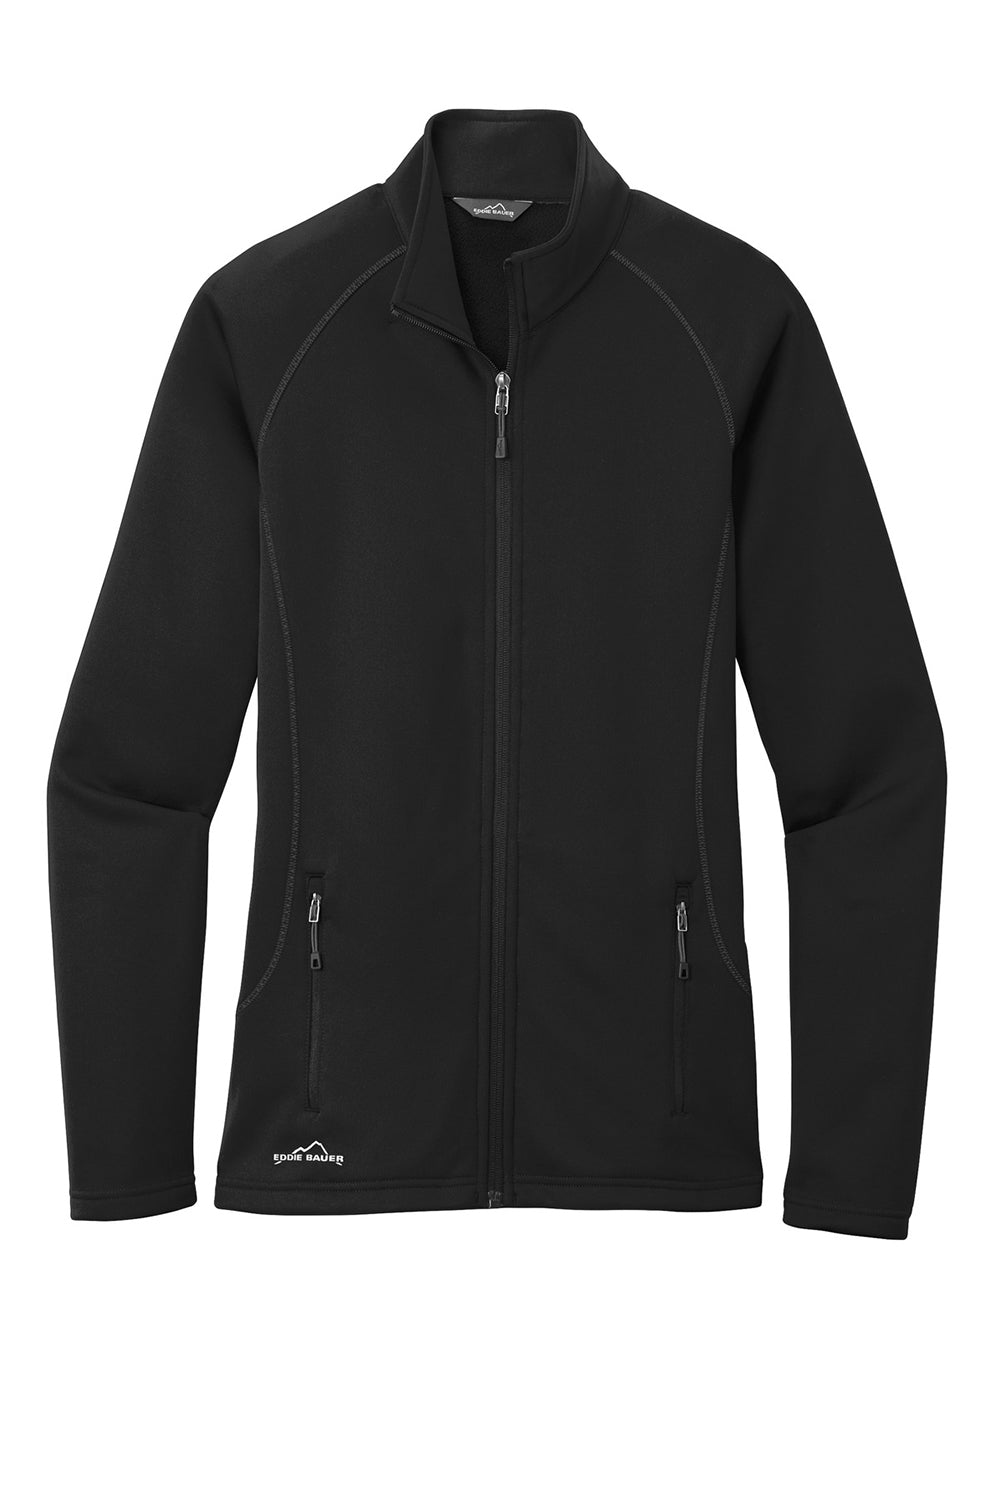 Eddie Bauer EB247 Womens Fleece Full Zip Jacket Black Flat Front